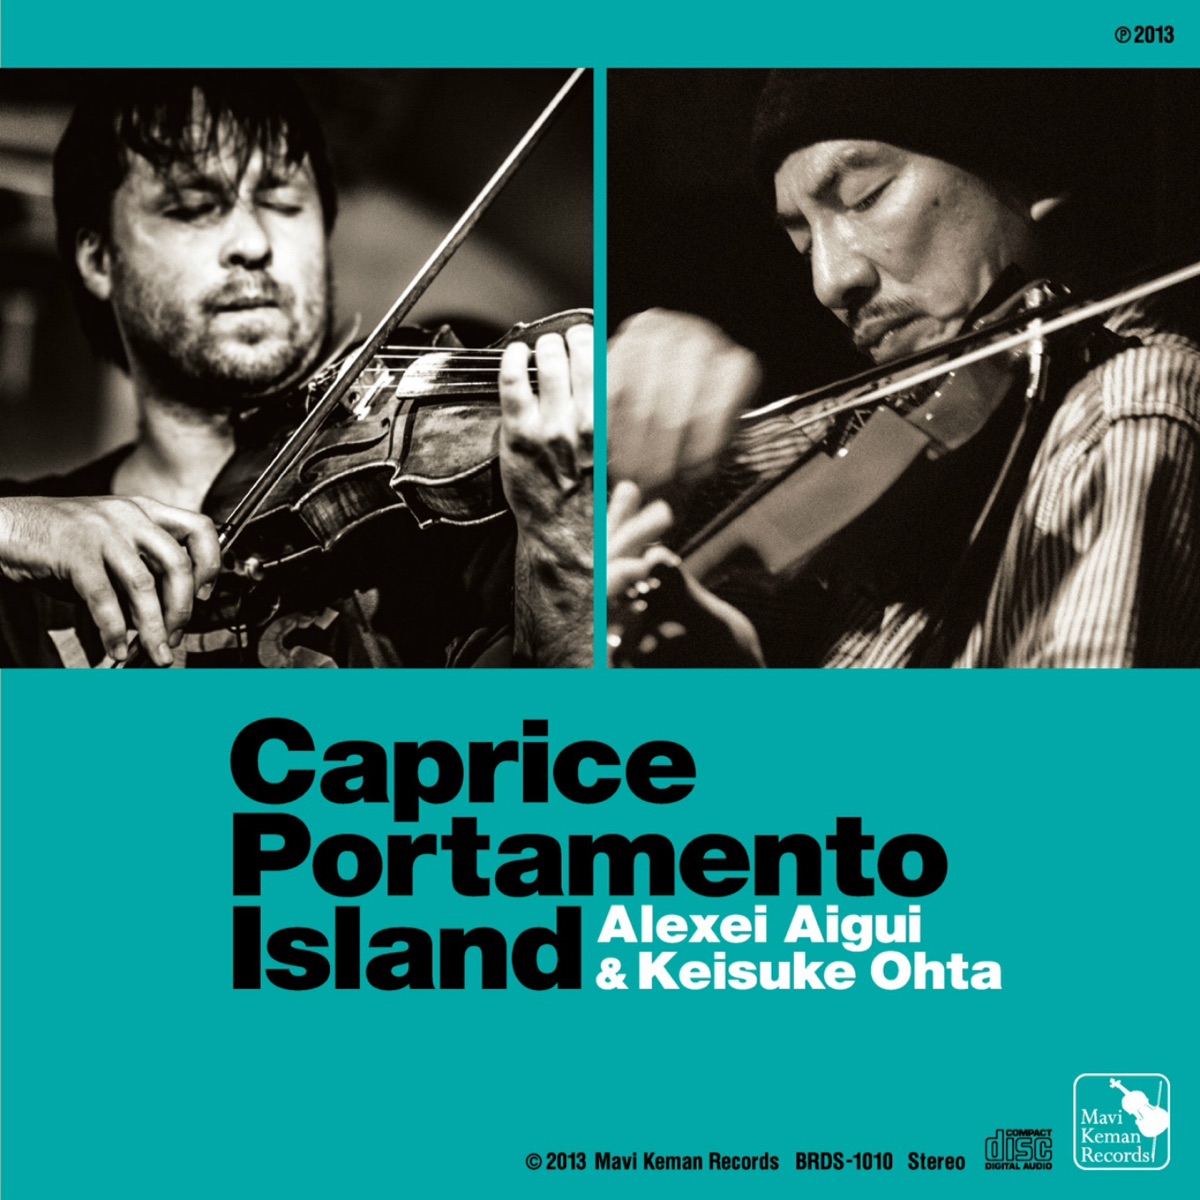 Caprice Portamento Island - Album by Alexei Aigui & KEISUKE OHTA - Apple  Music